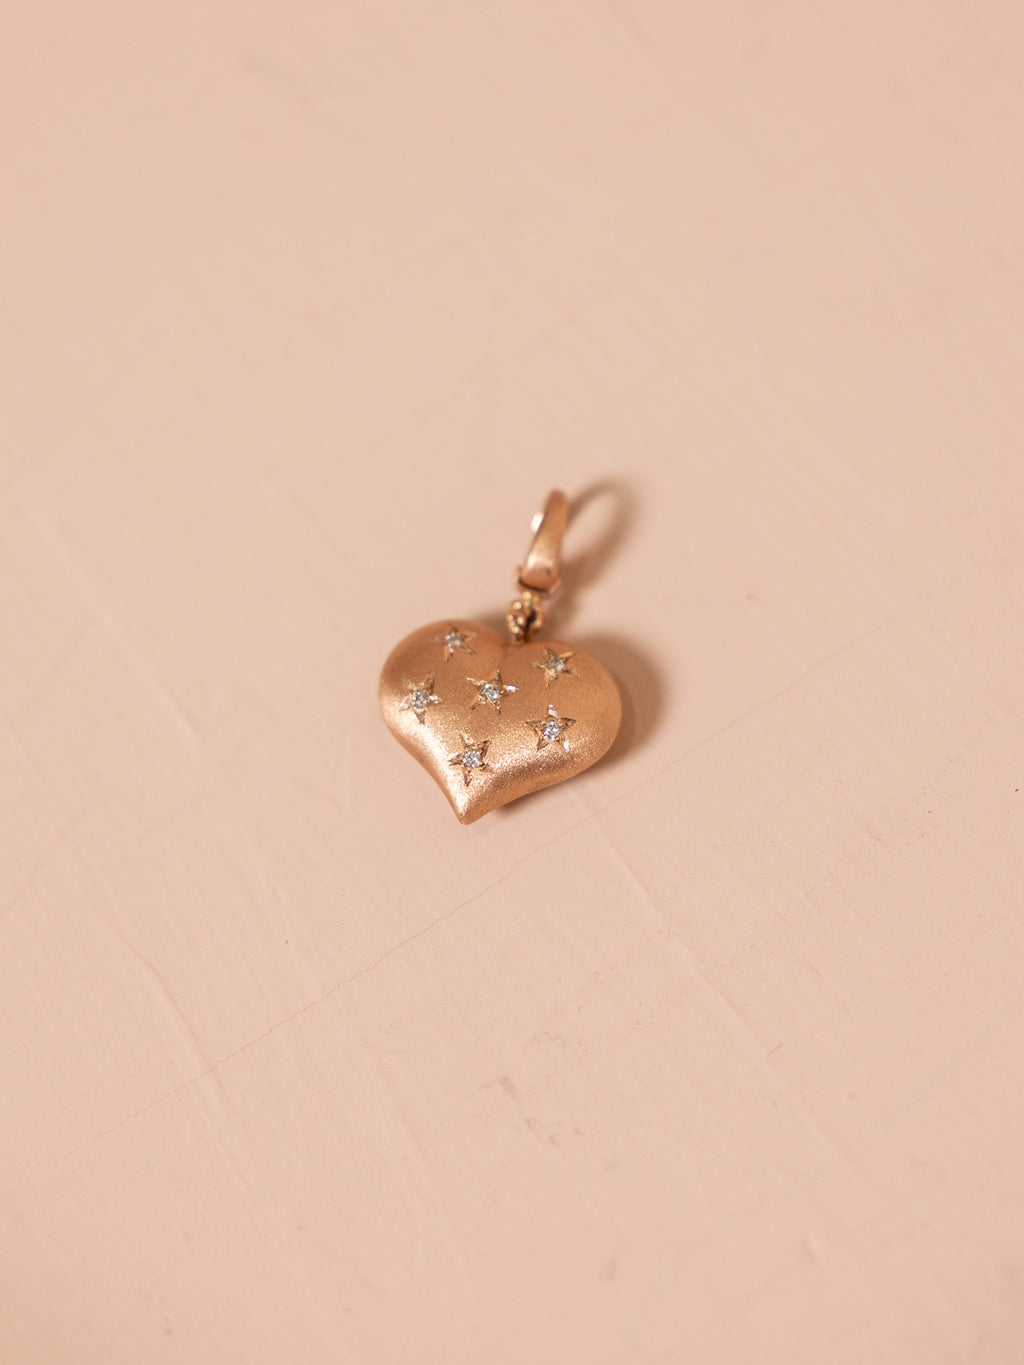 inlay heart charm, 22K satin gold brass, gold, satin gold, heart charm,  heart, heart pendant, heart